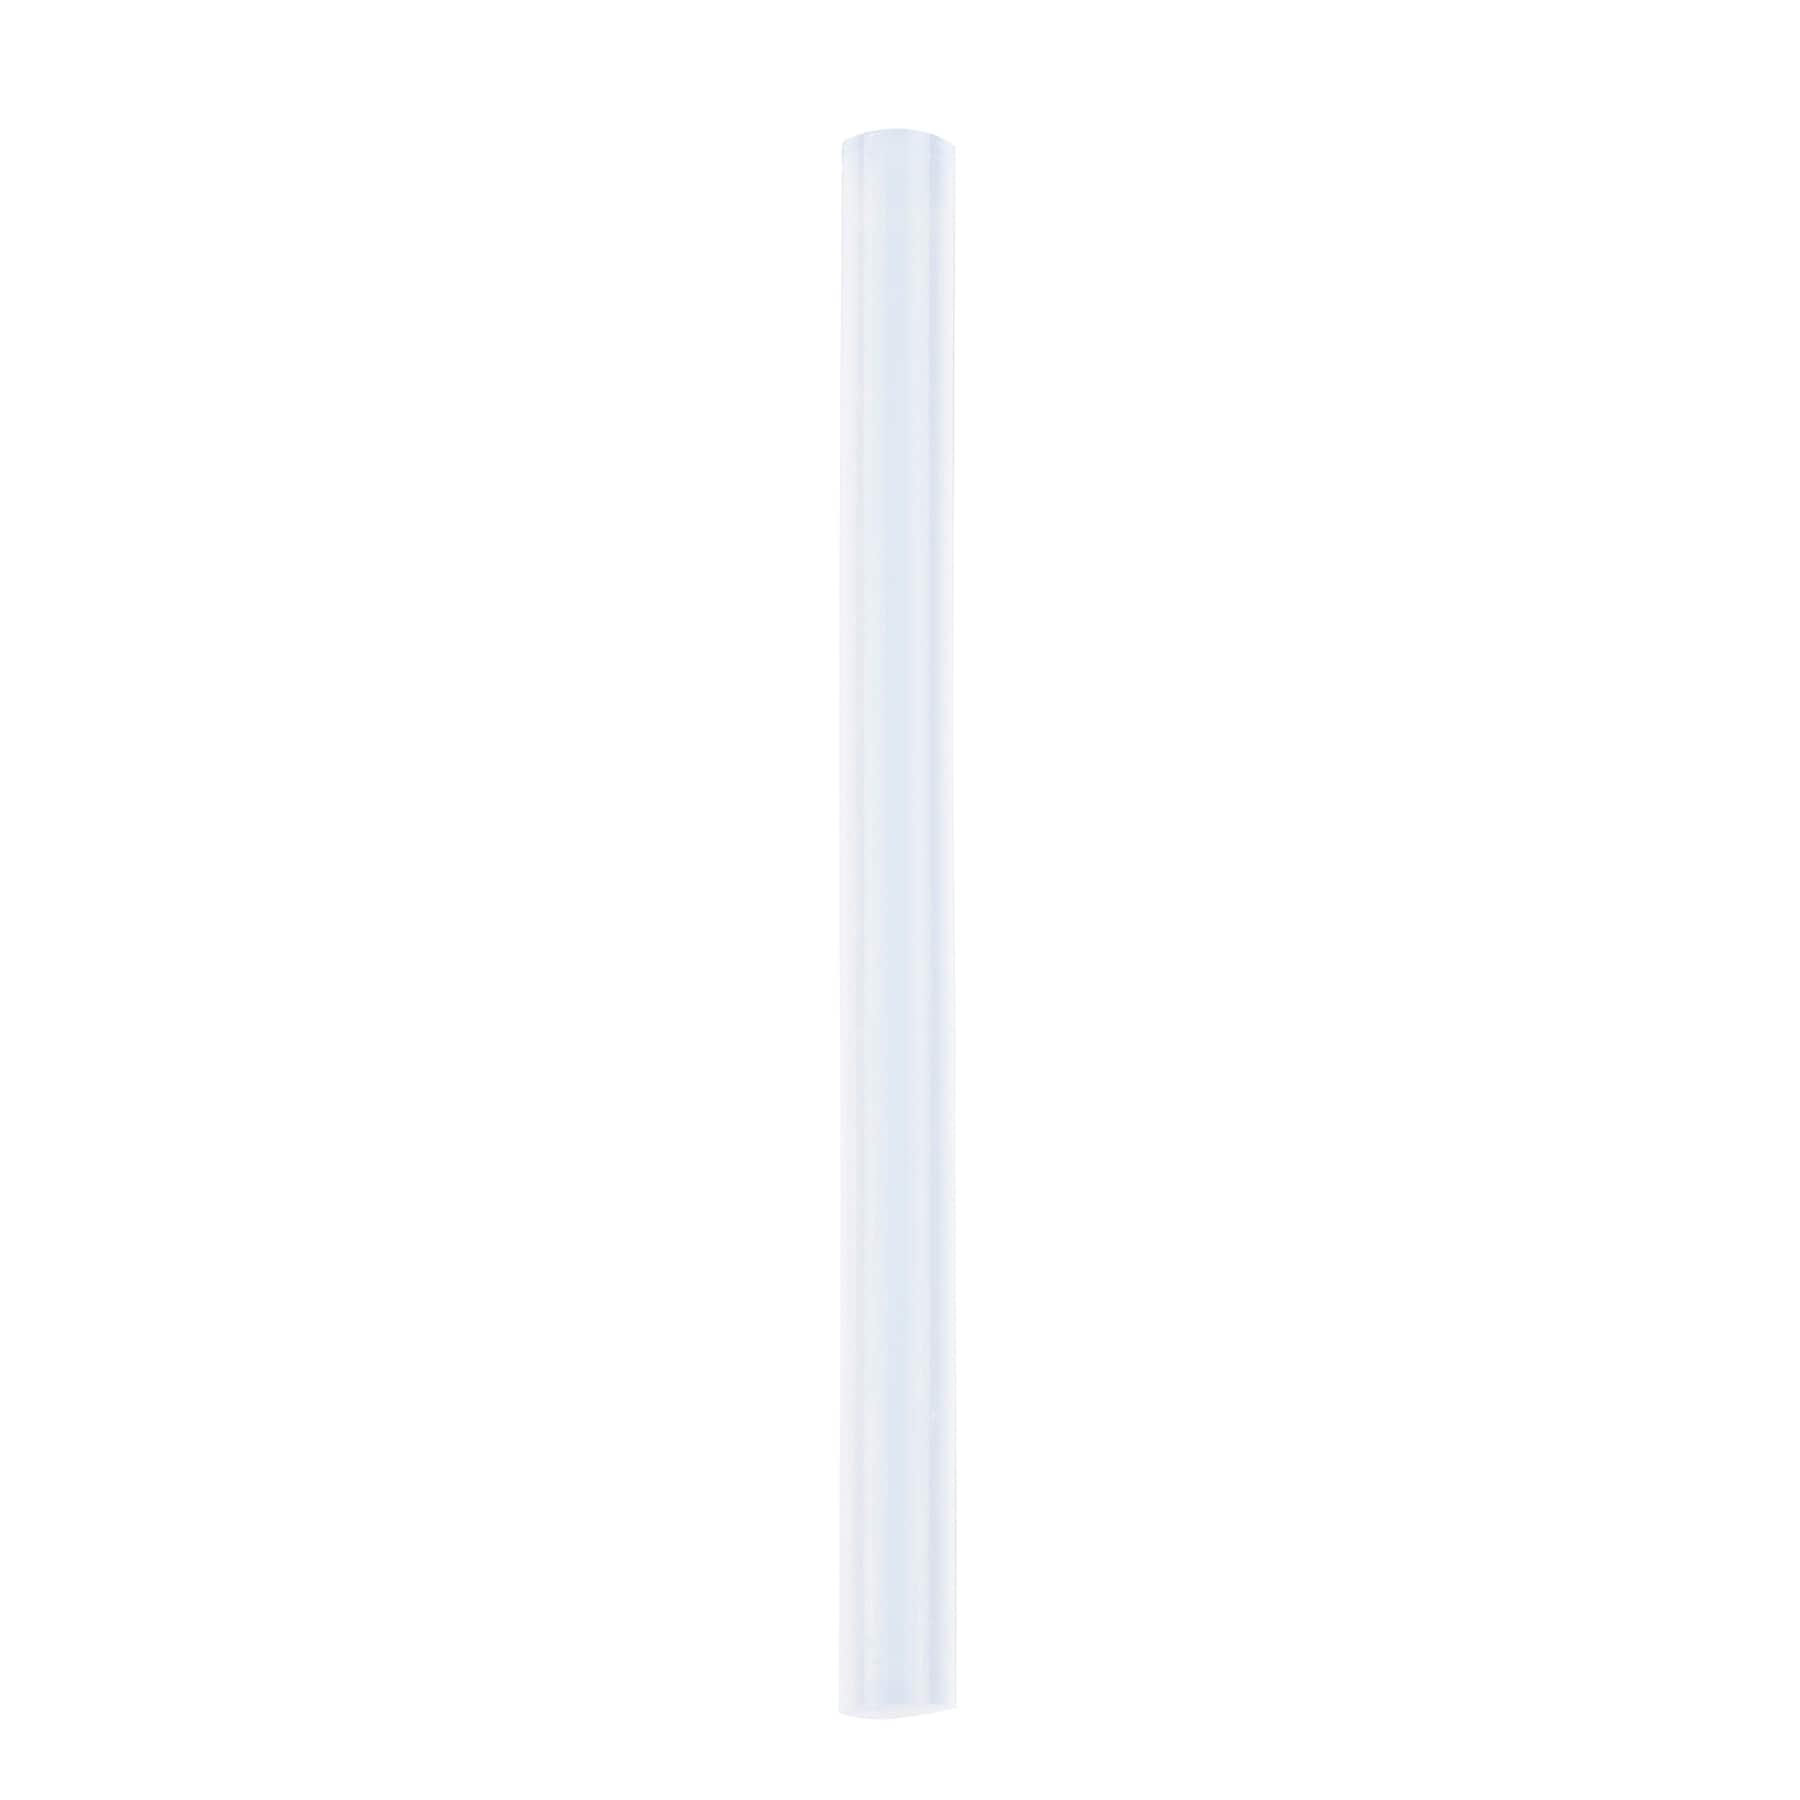 10 Packs: 100 ct. (1,000 total) Mini Dual Temperature Glue Sticks by Ashland&#xAE;